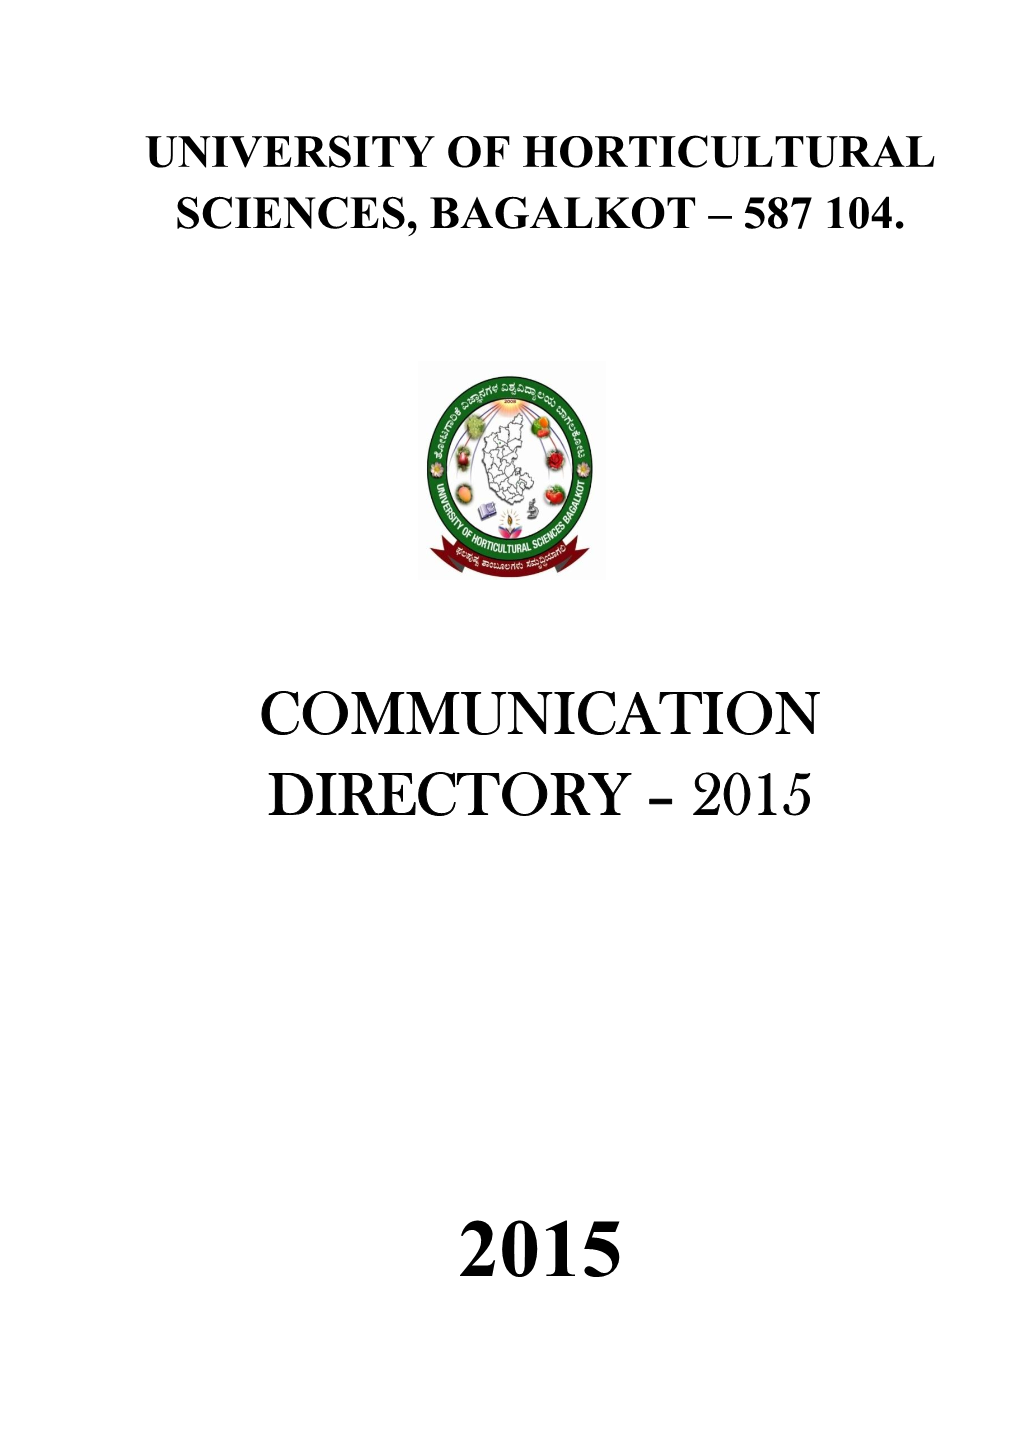 Communication Directory – 2015